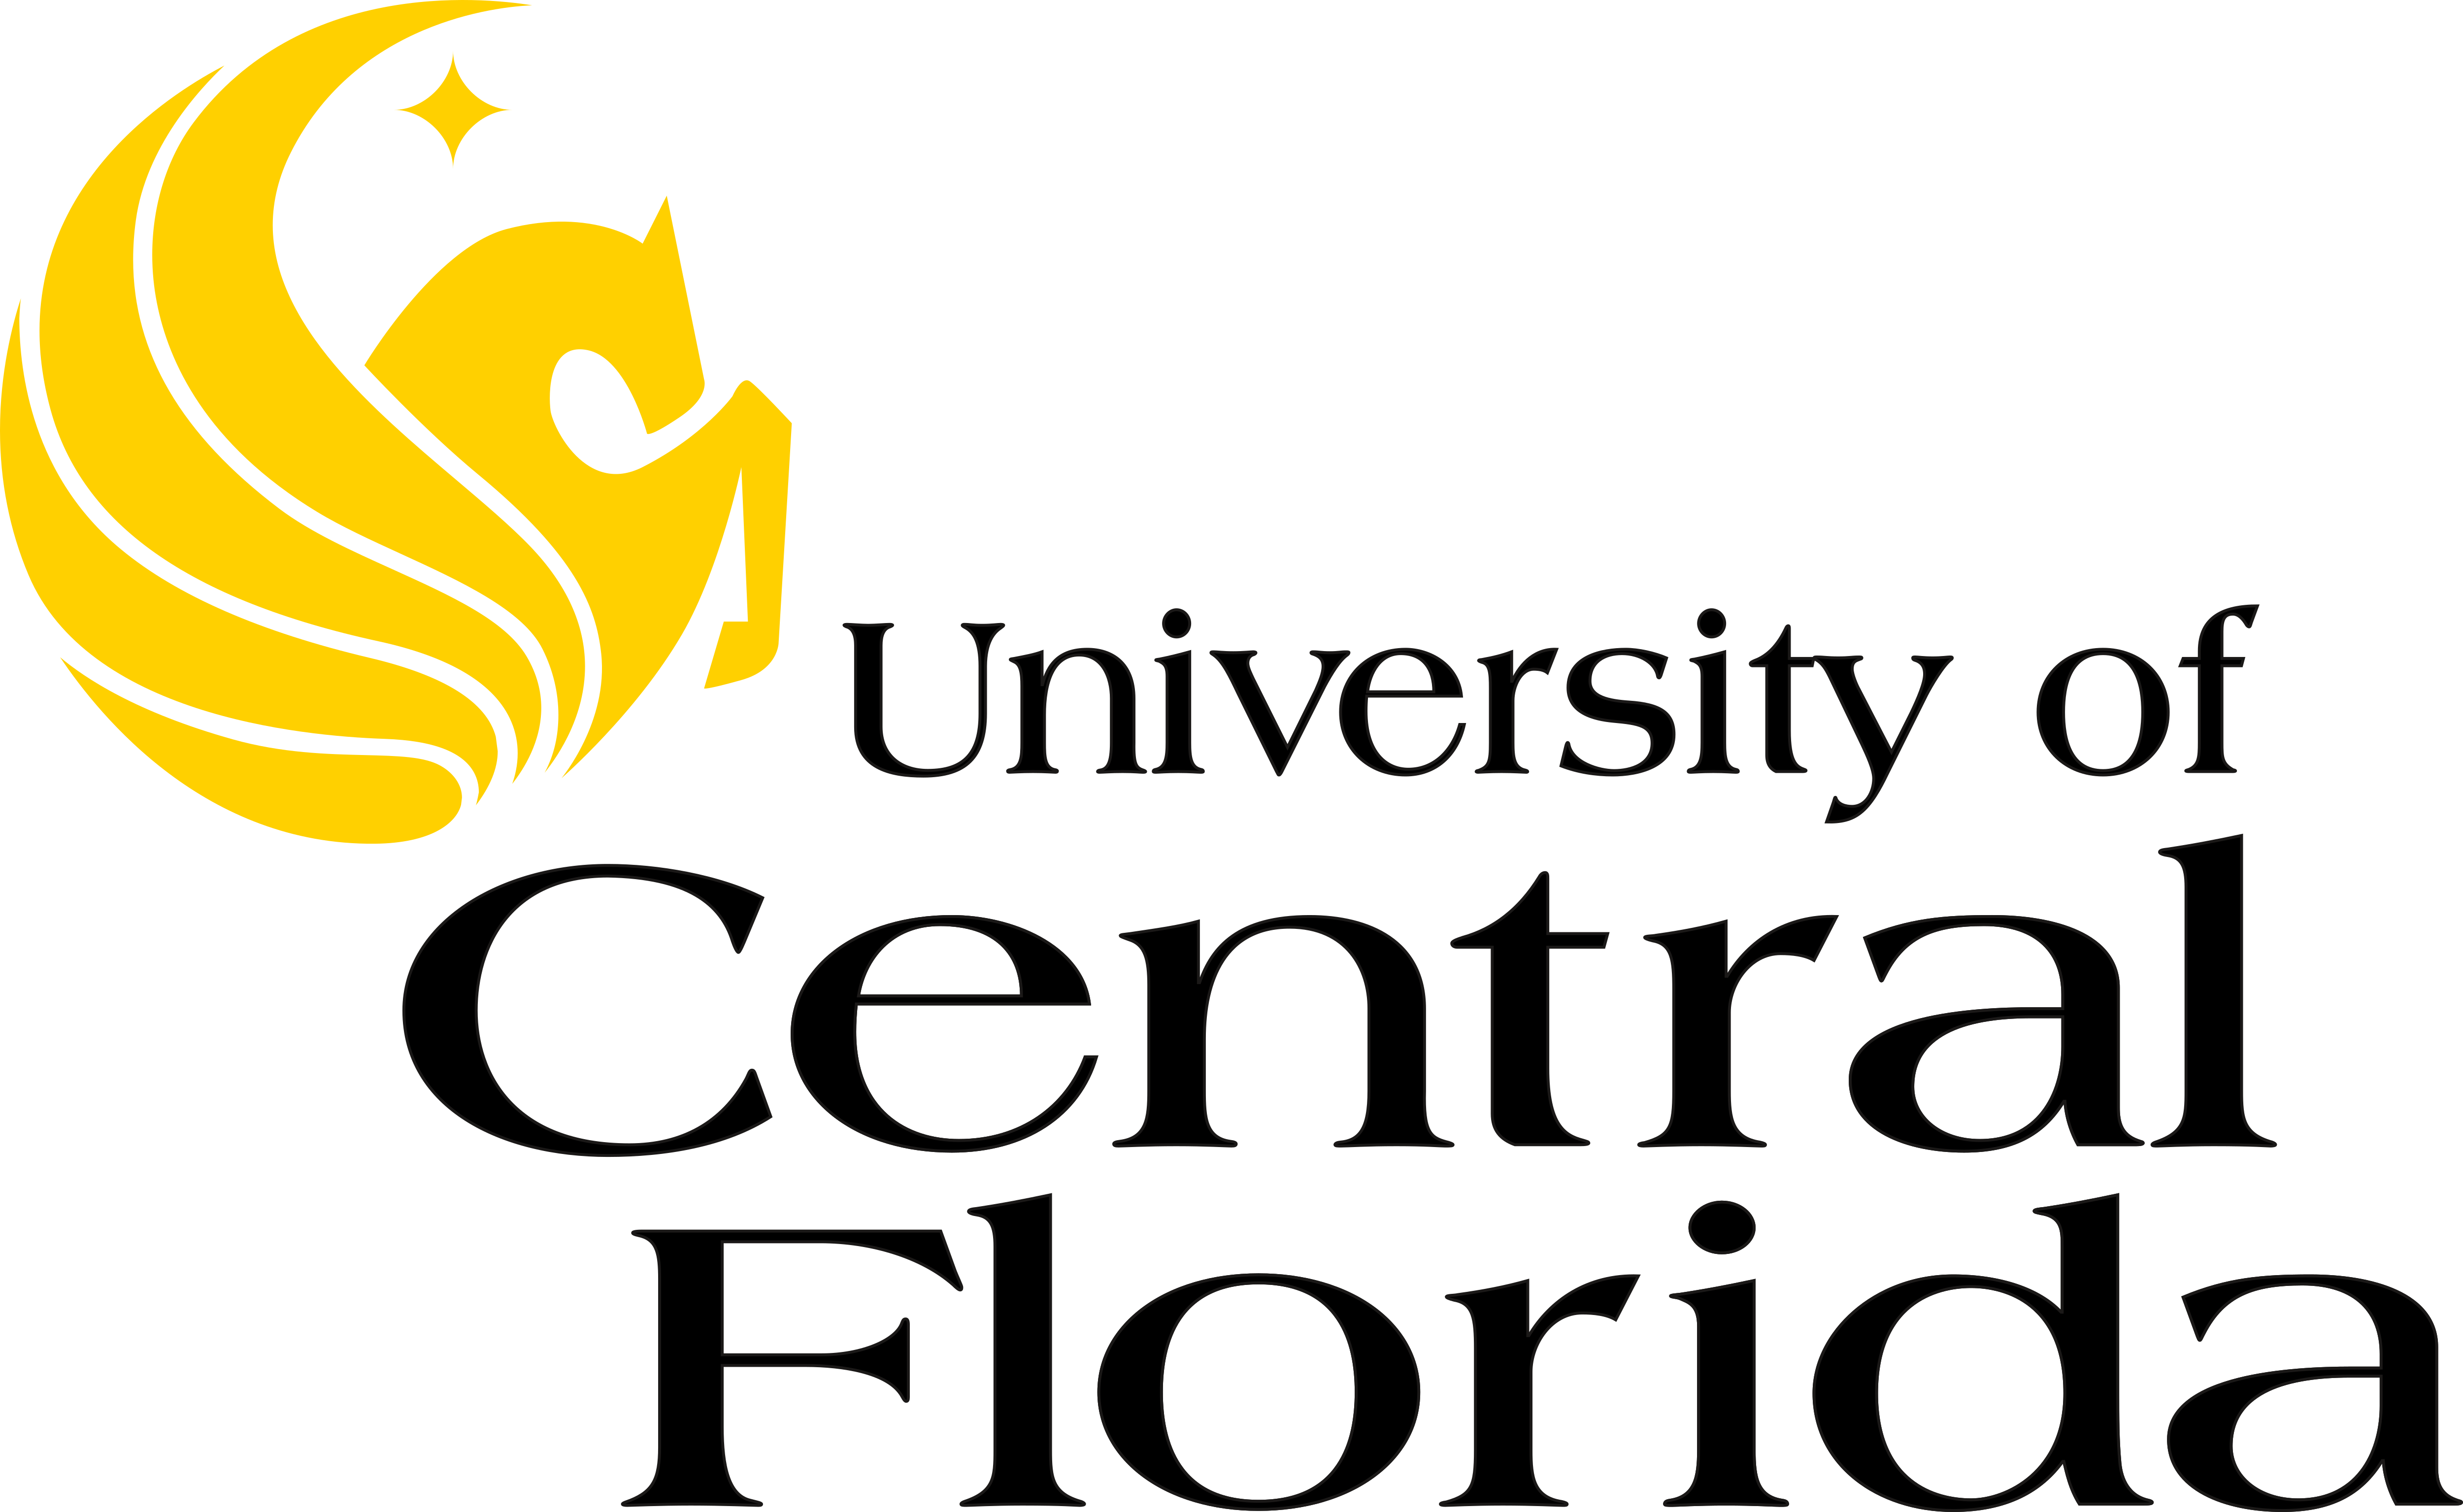 University of Central Florida – Last ned logoer